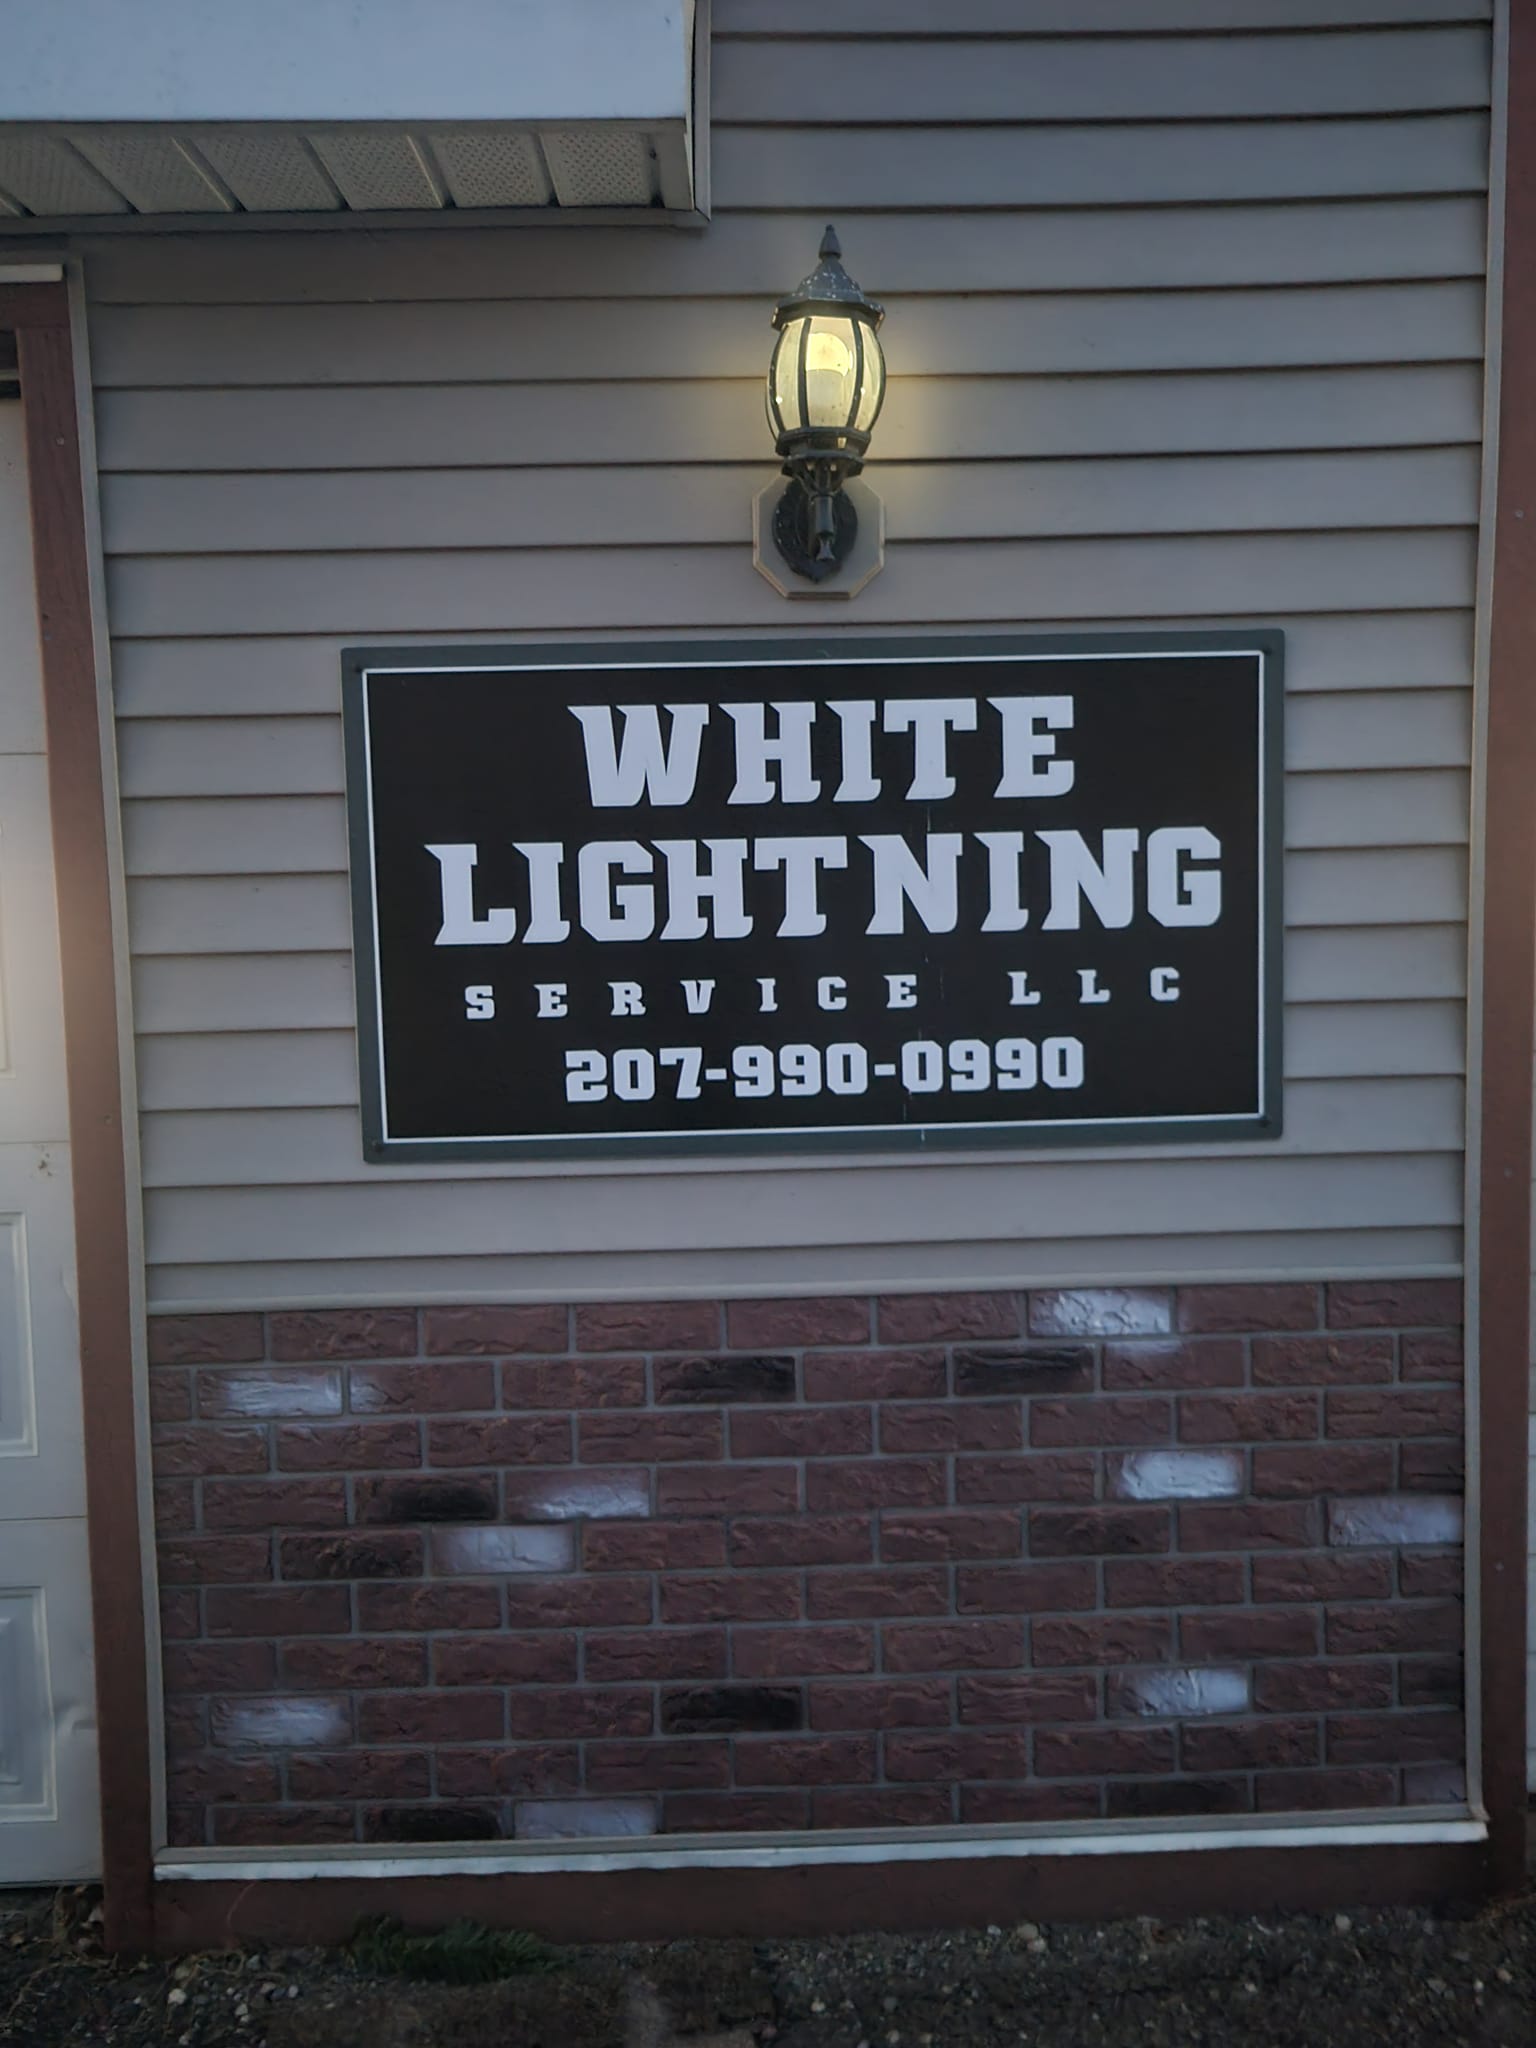 White Lightning Service LLC 2904 Broadway, Glenburn Maine 04401